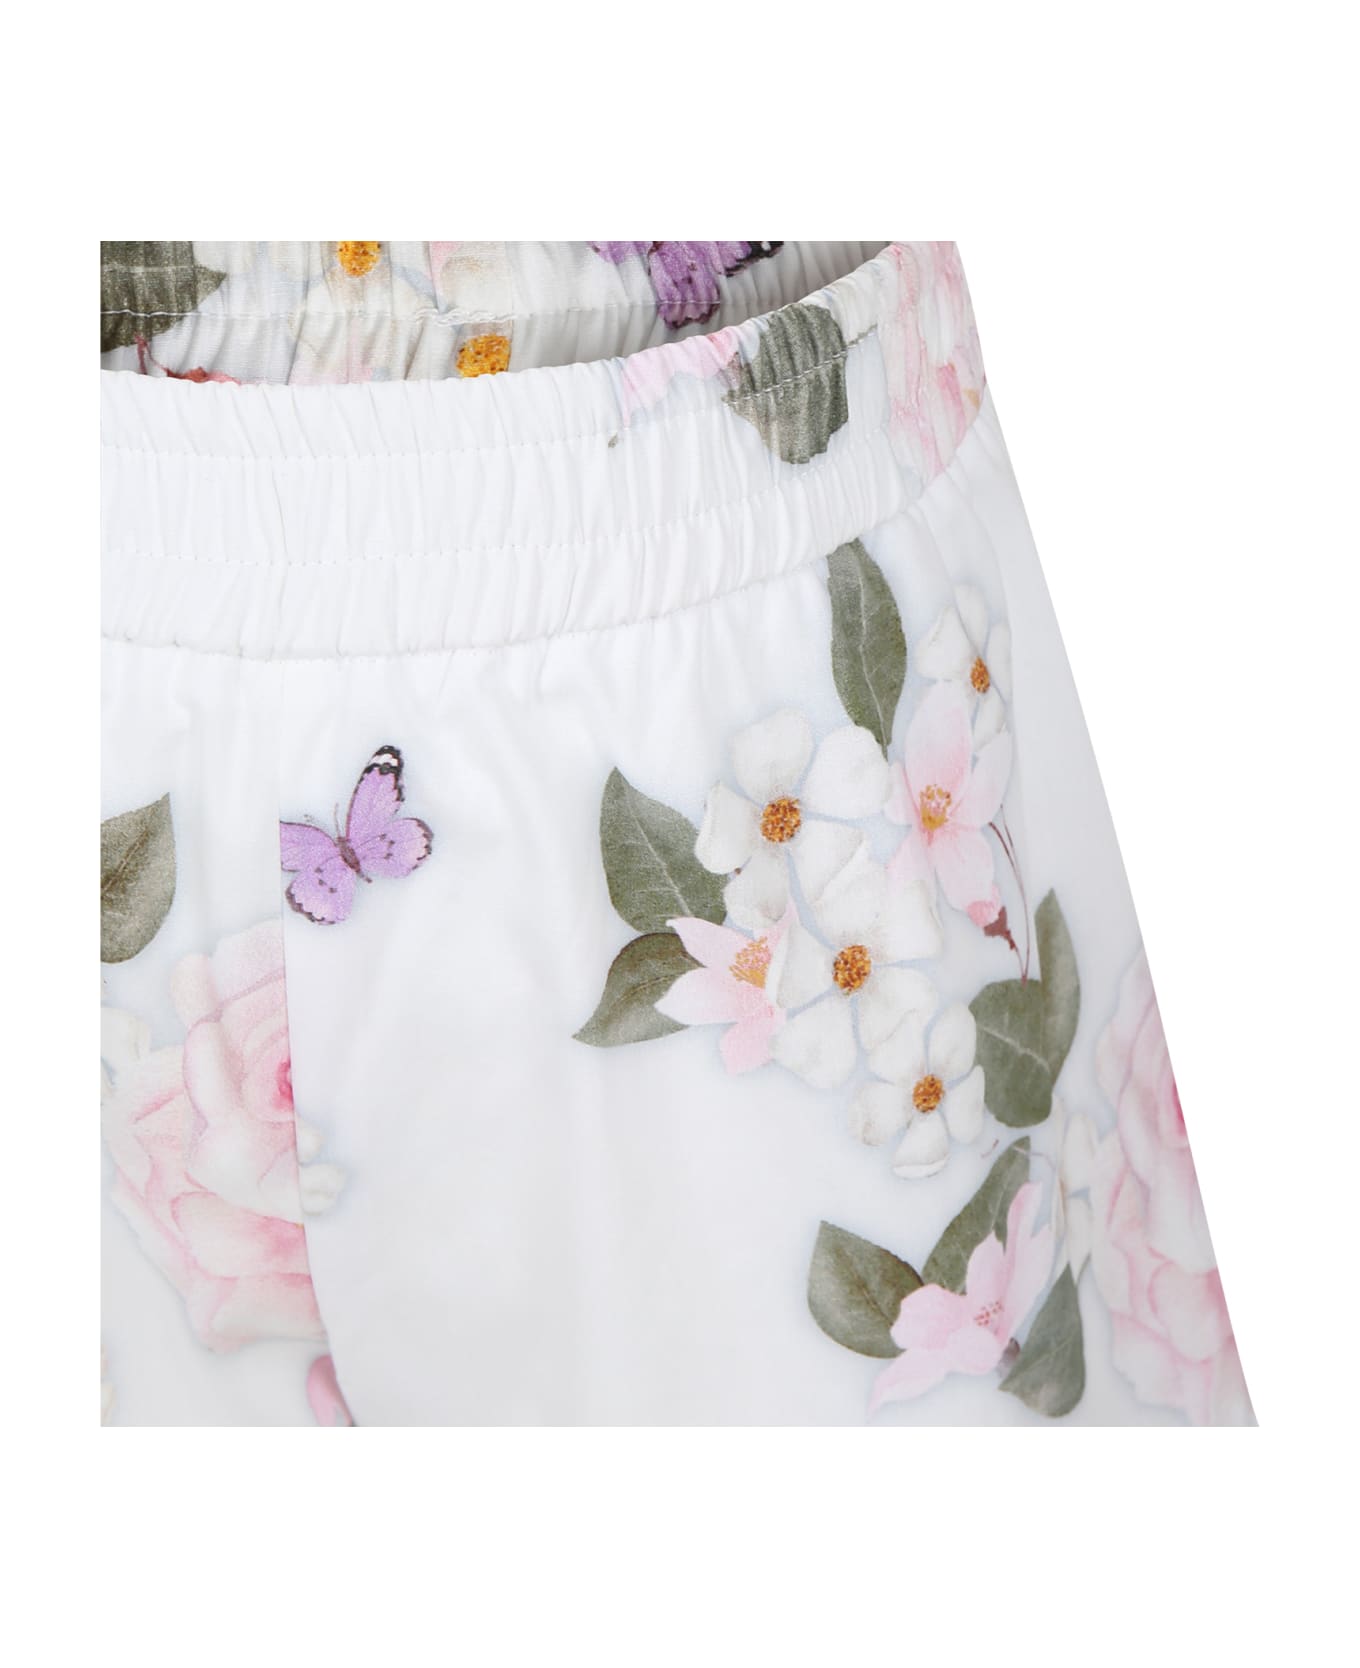 Monnalisa White Shorts For Girl With Floreal Print - White ボトムス